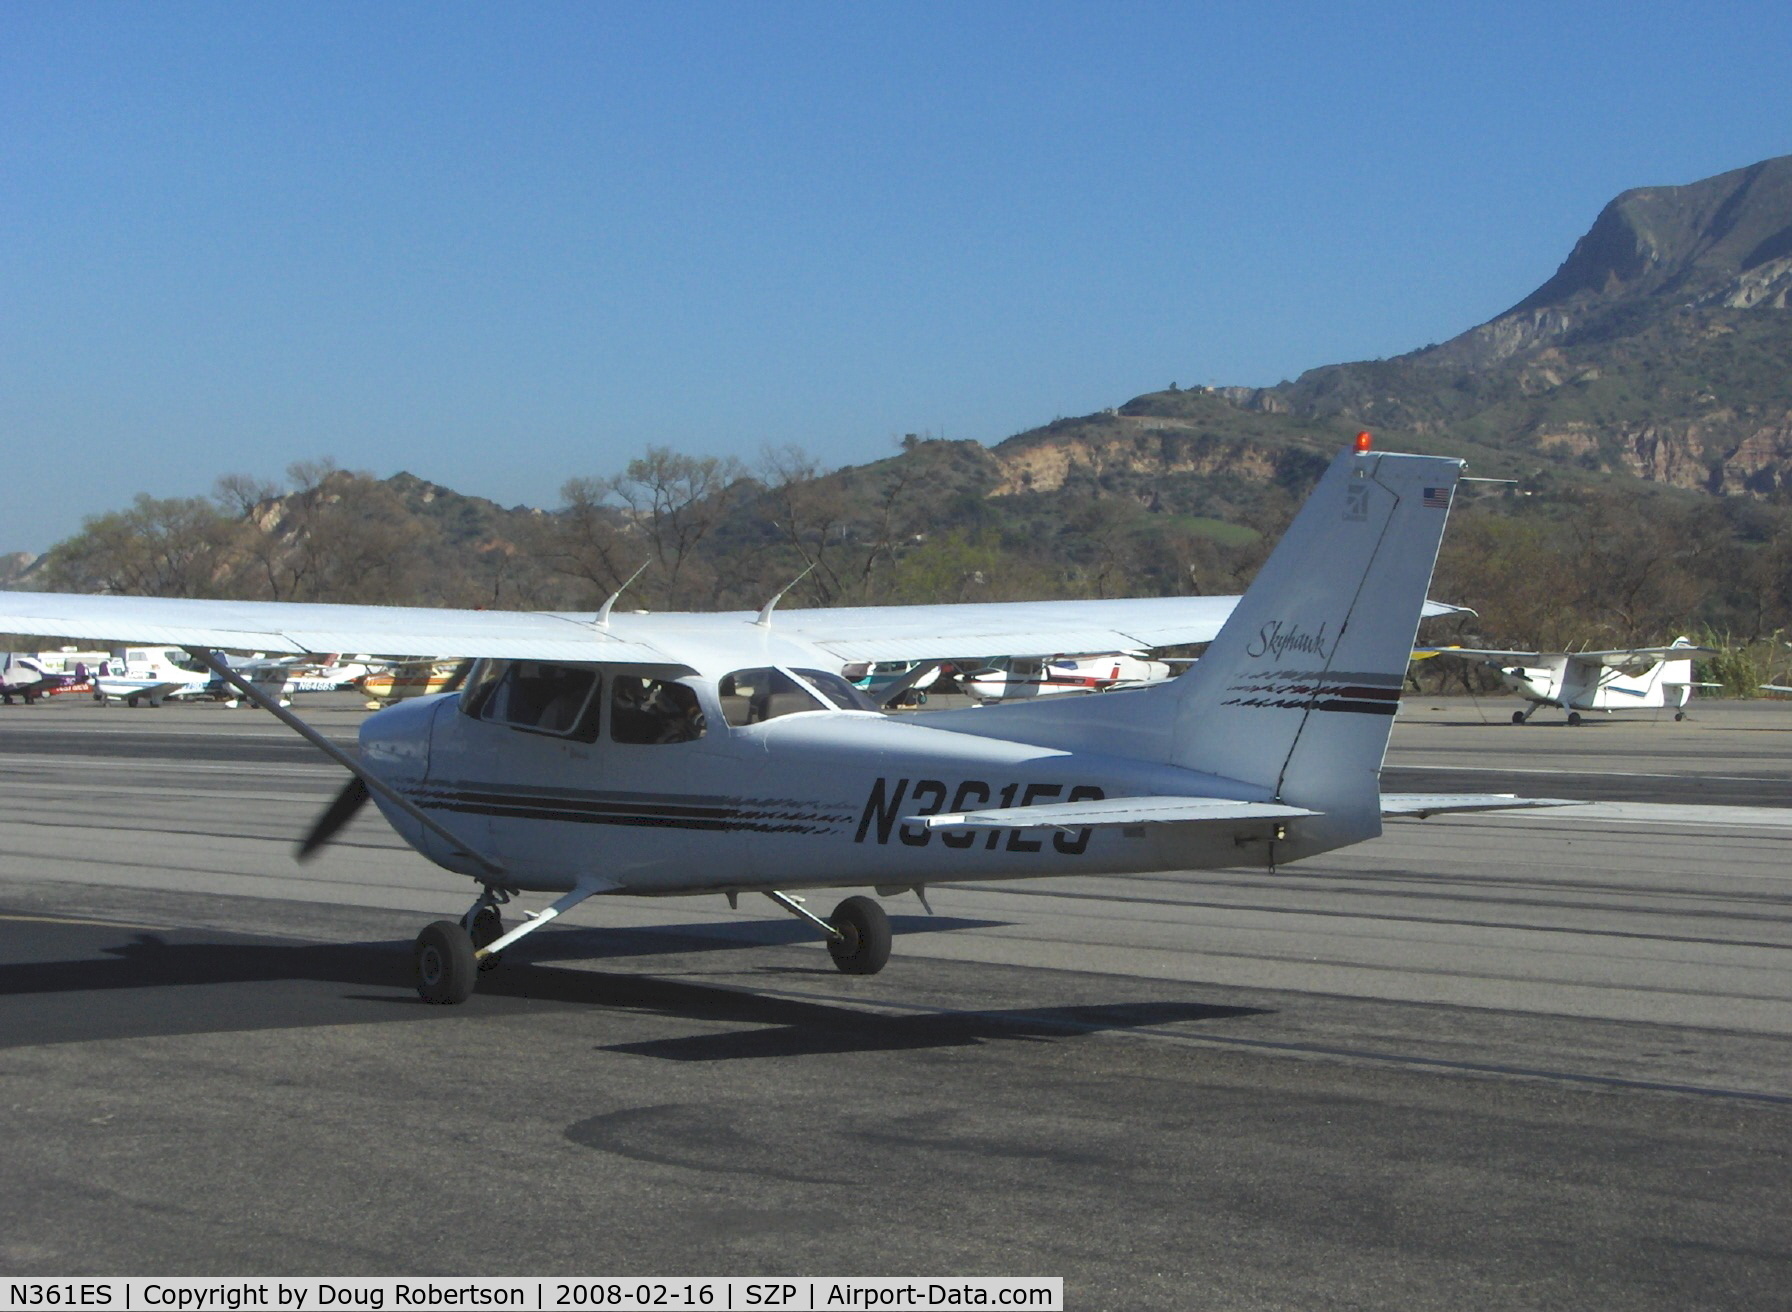 N361ES, 1997 Cessna 172R C/N 17280011, 1997 Cessna 172R SKYHAWK, Lycoming IO-360-L2A 160 Hp, taxi to Rwy 22